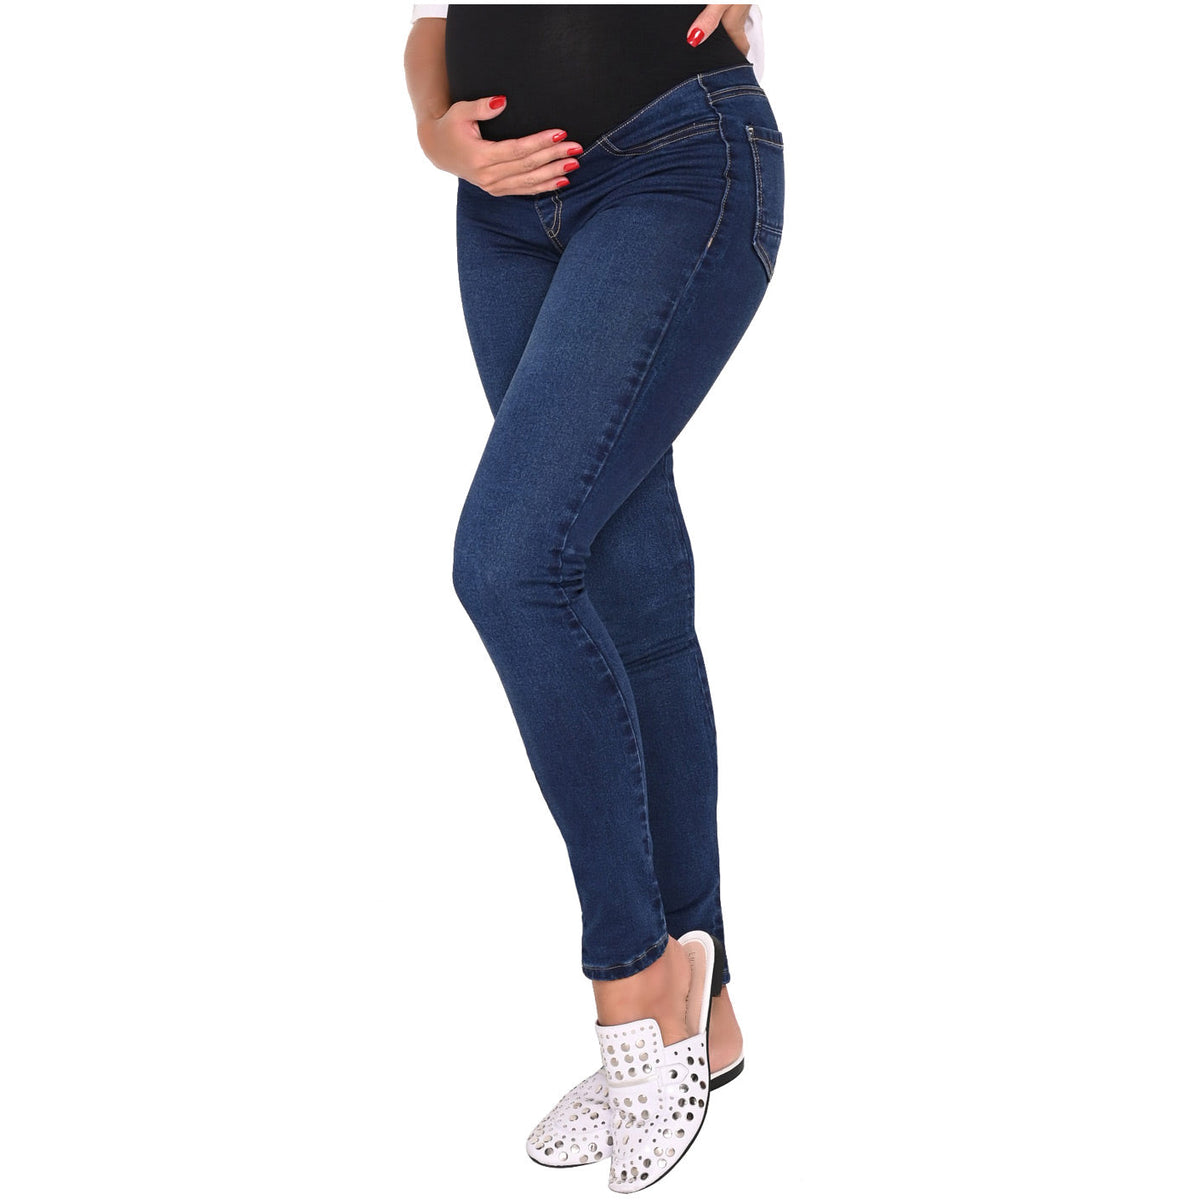 JASPE - LOWLA 219898 - Maternity Skinny Jeans